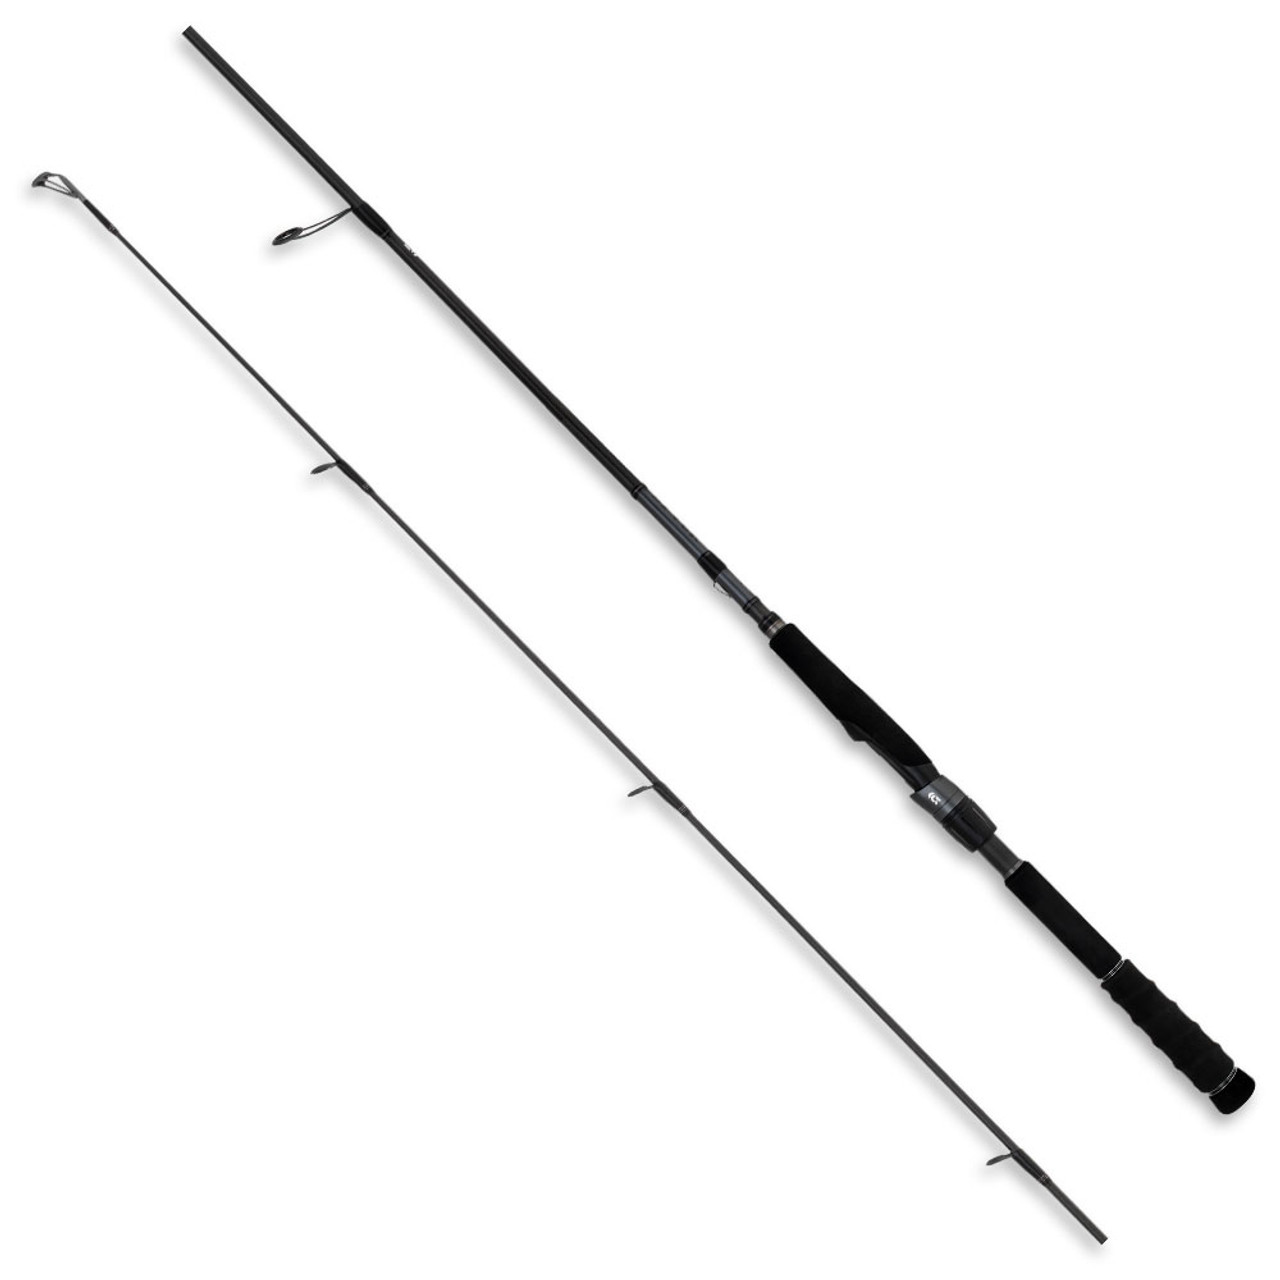 Daiwa TD Black Fishing Rods